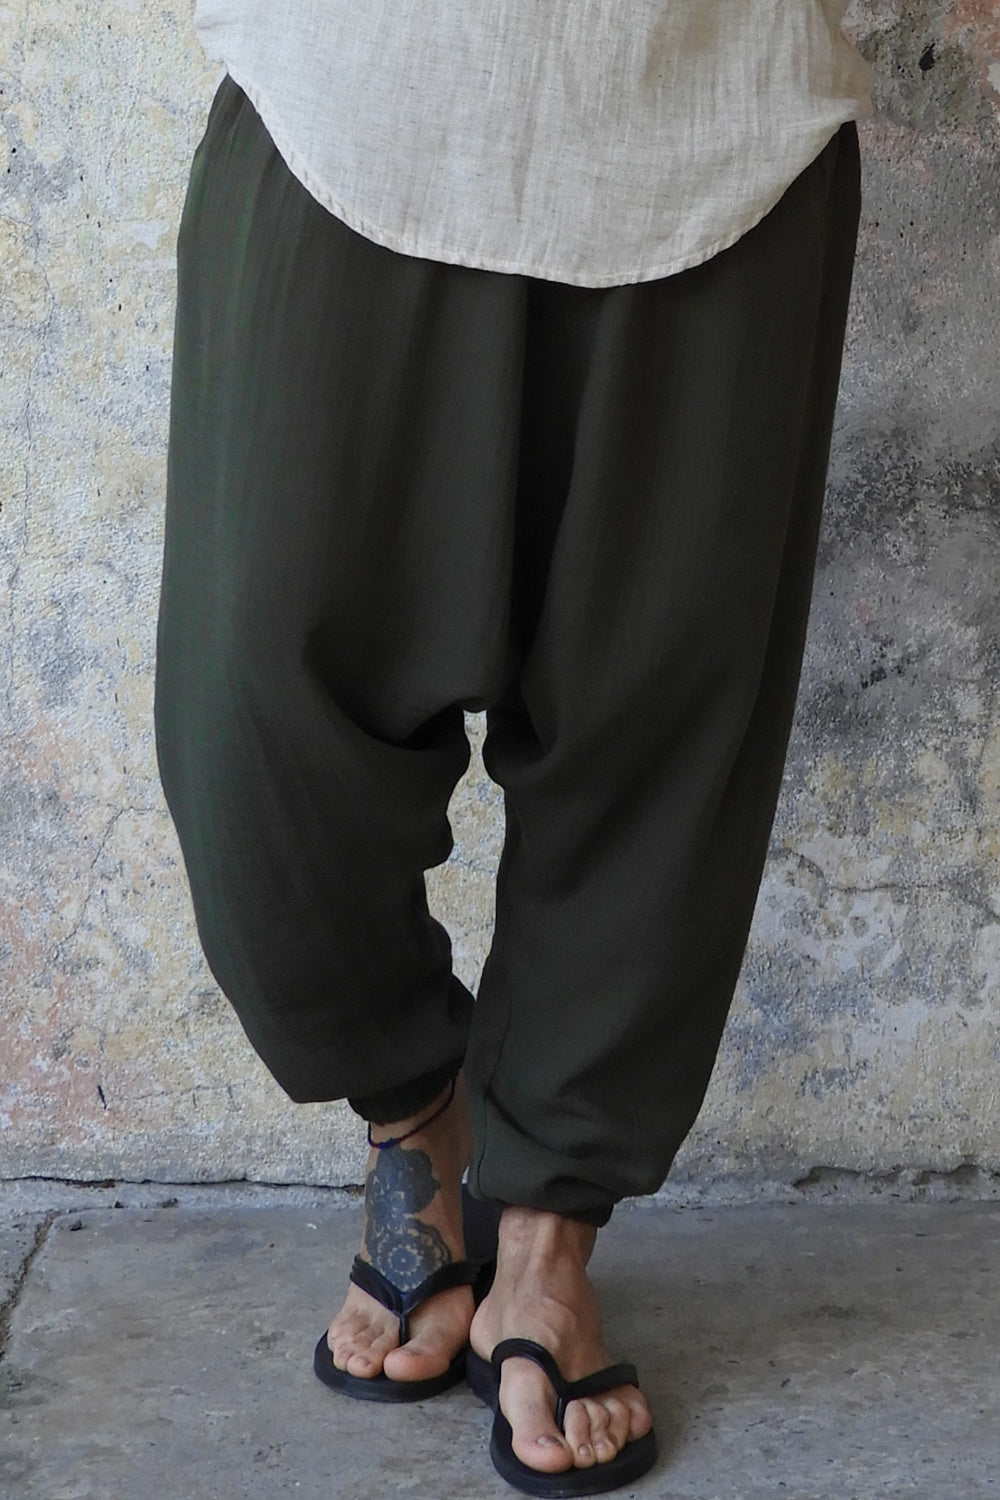 Sustainable  | TRIBAL Men's Gauze Cotton Harem Pants (Army Green, Sage Green) by Odana's